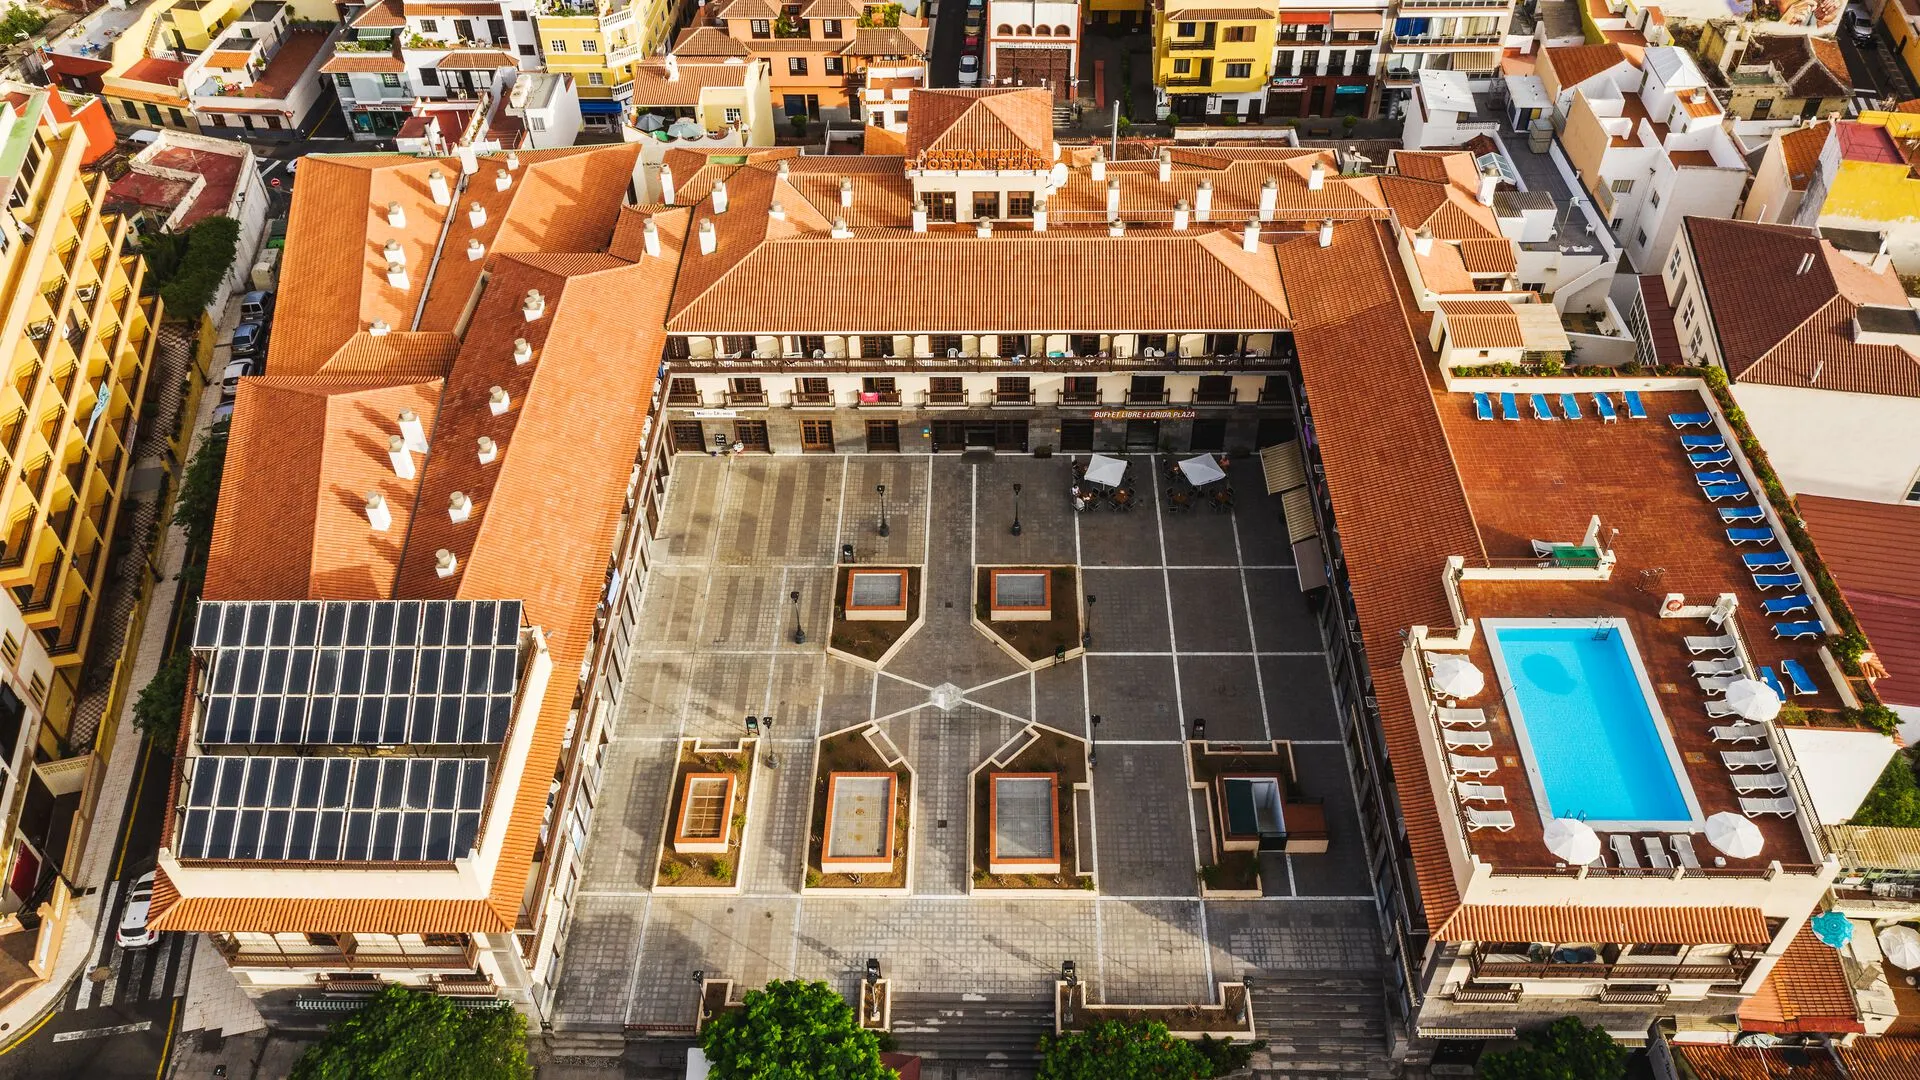 Canaries - Tenerife - Espagne - Hotel Be Smart Florida Plaza 3*